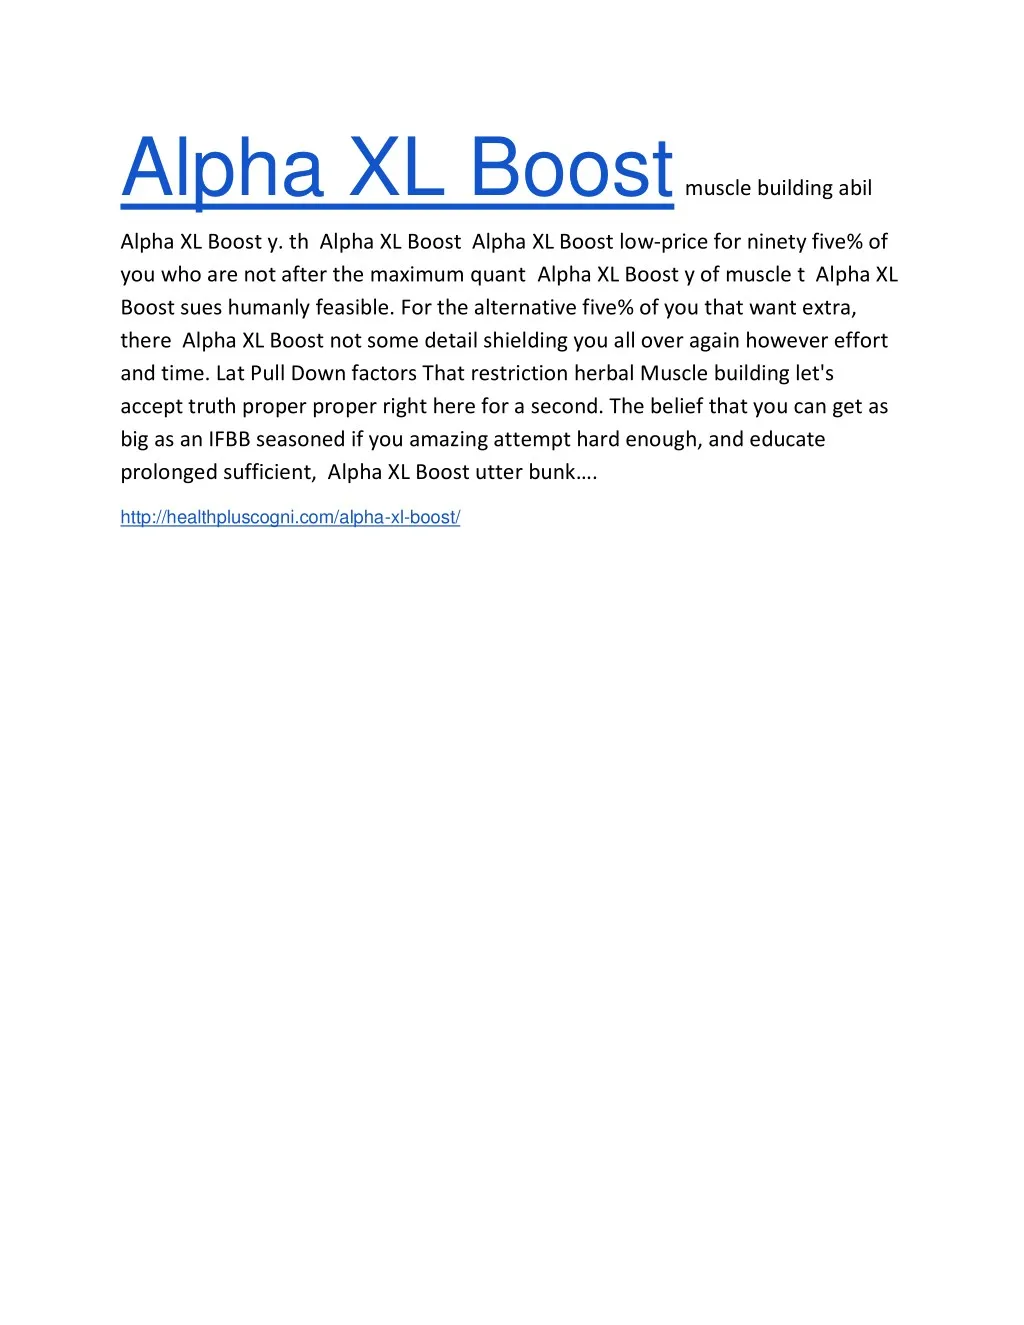 alpha xl boost muscle building abil